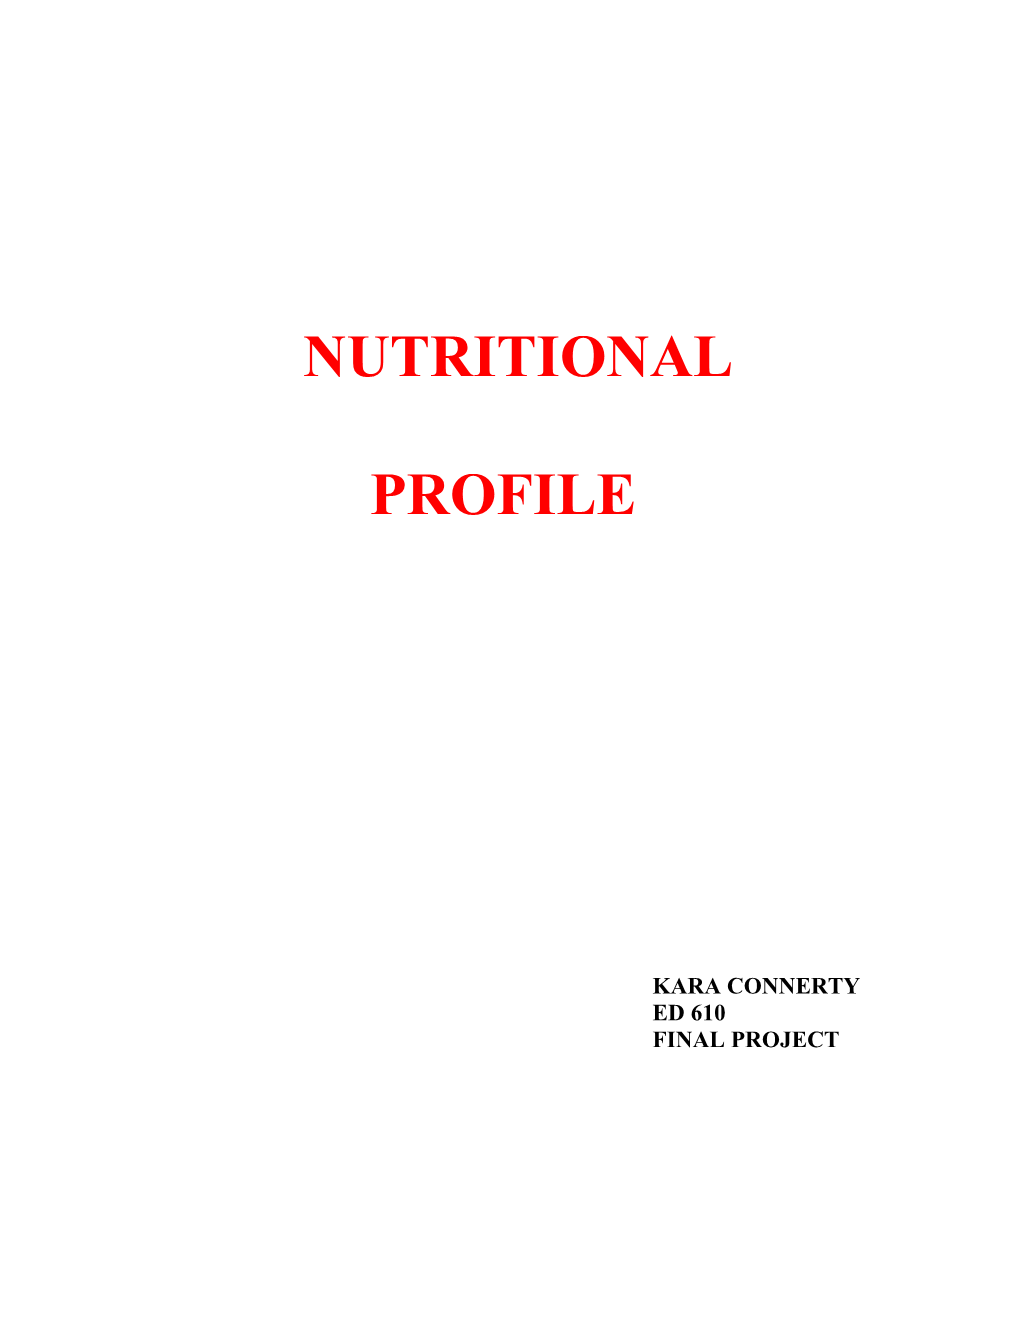 Nutritional Profile Draft